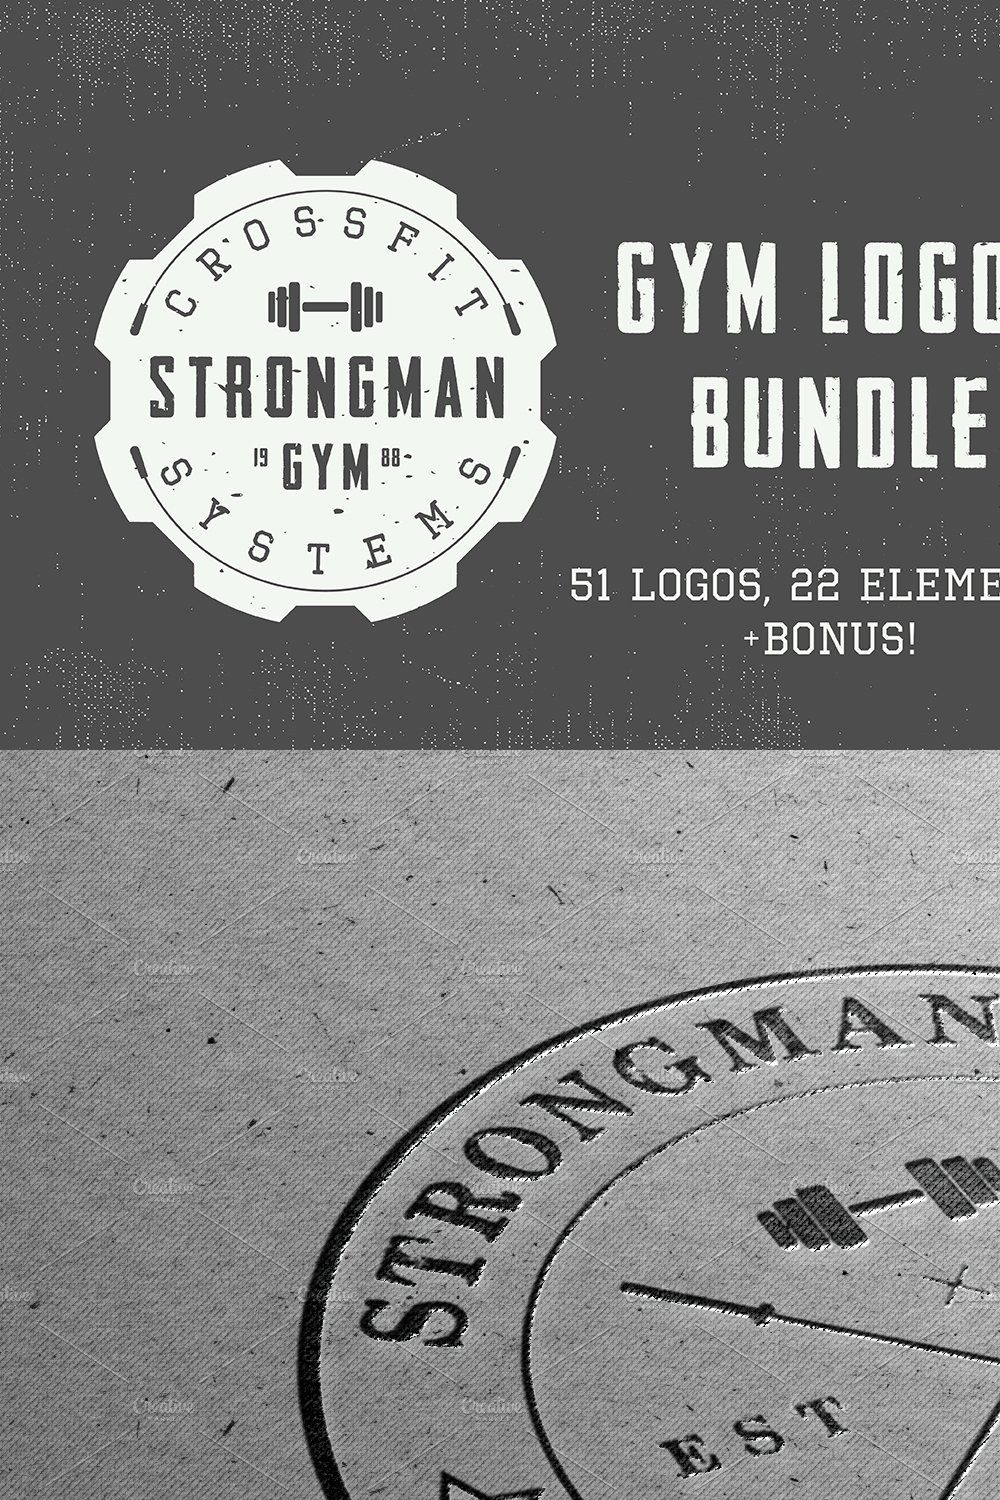 Set of vintage gym logos pinterest preview image.